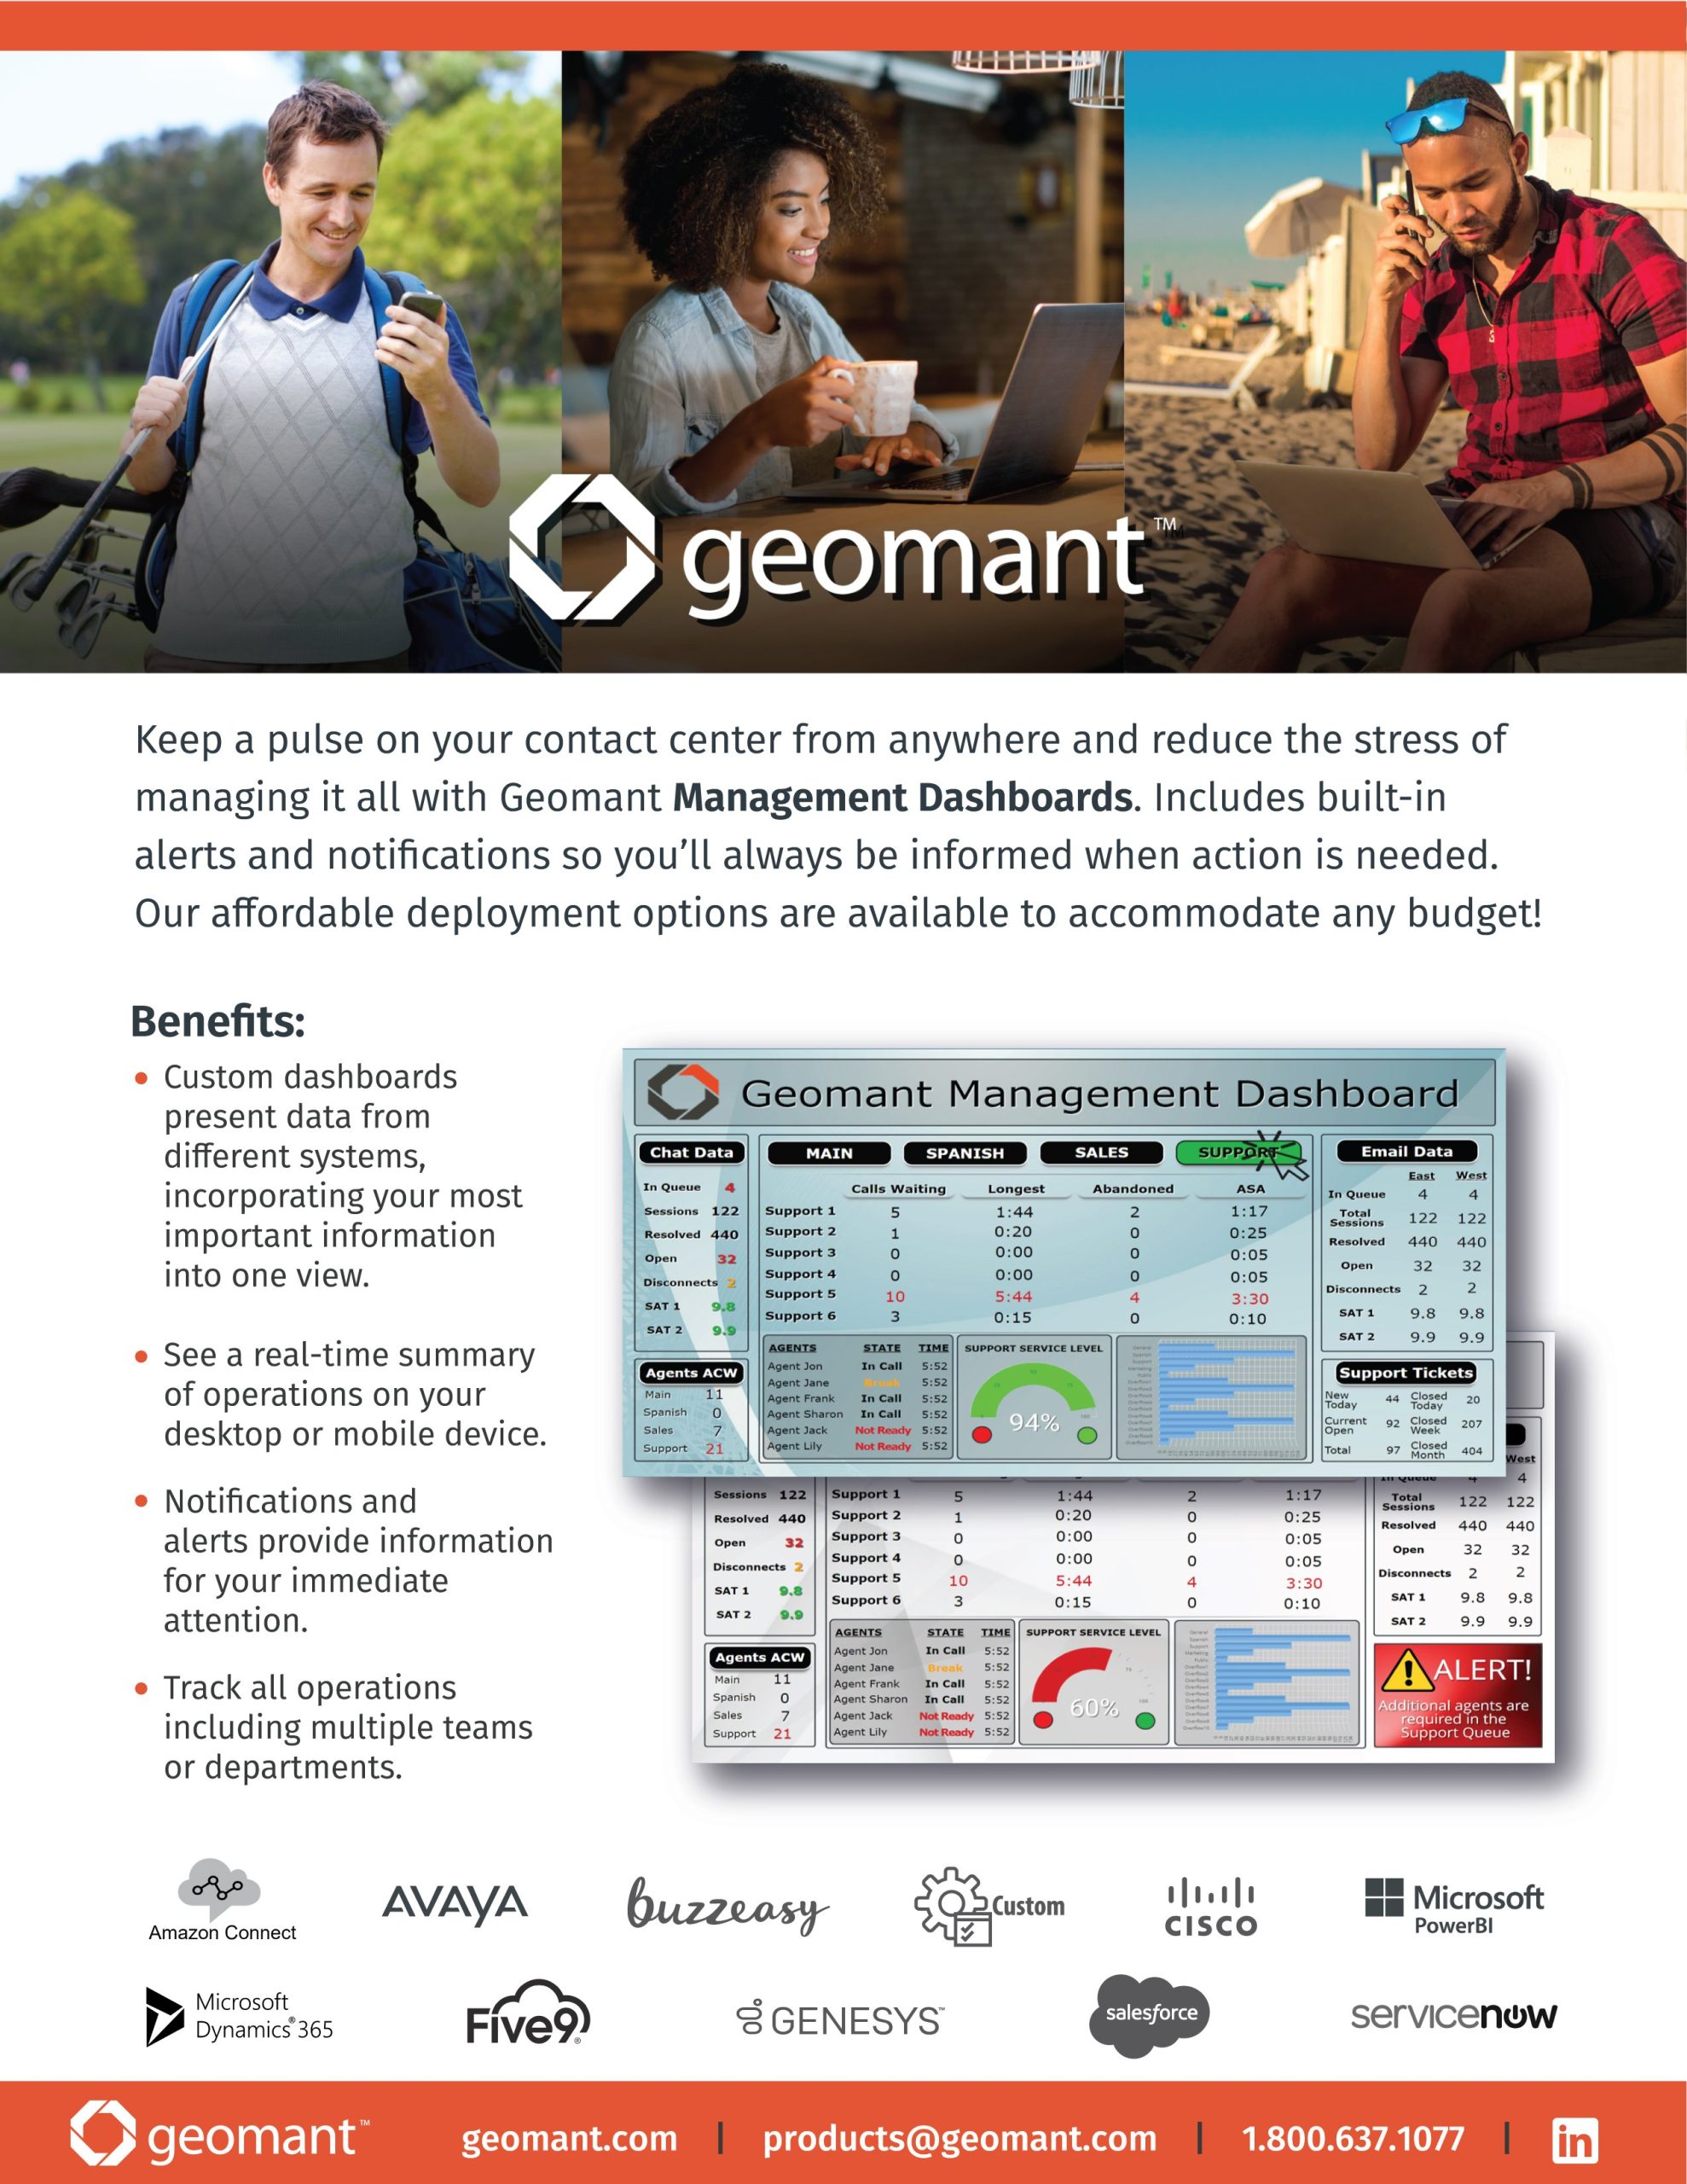 Geomant Management Dashboard Flyer - Image